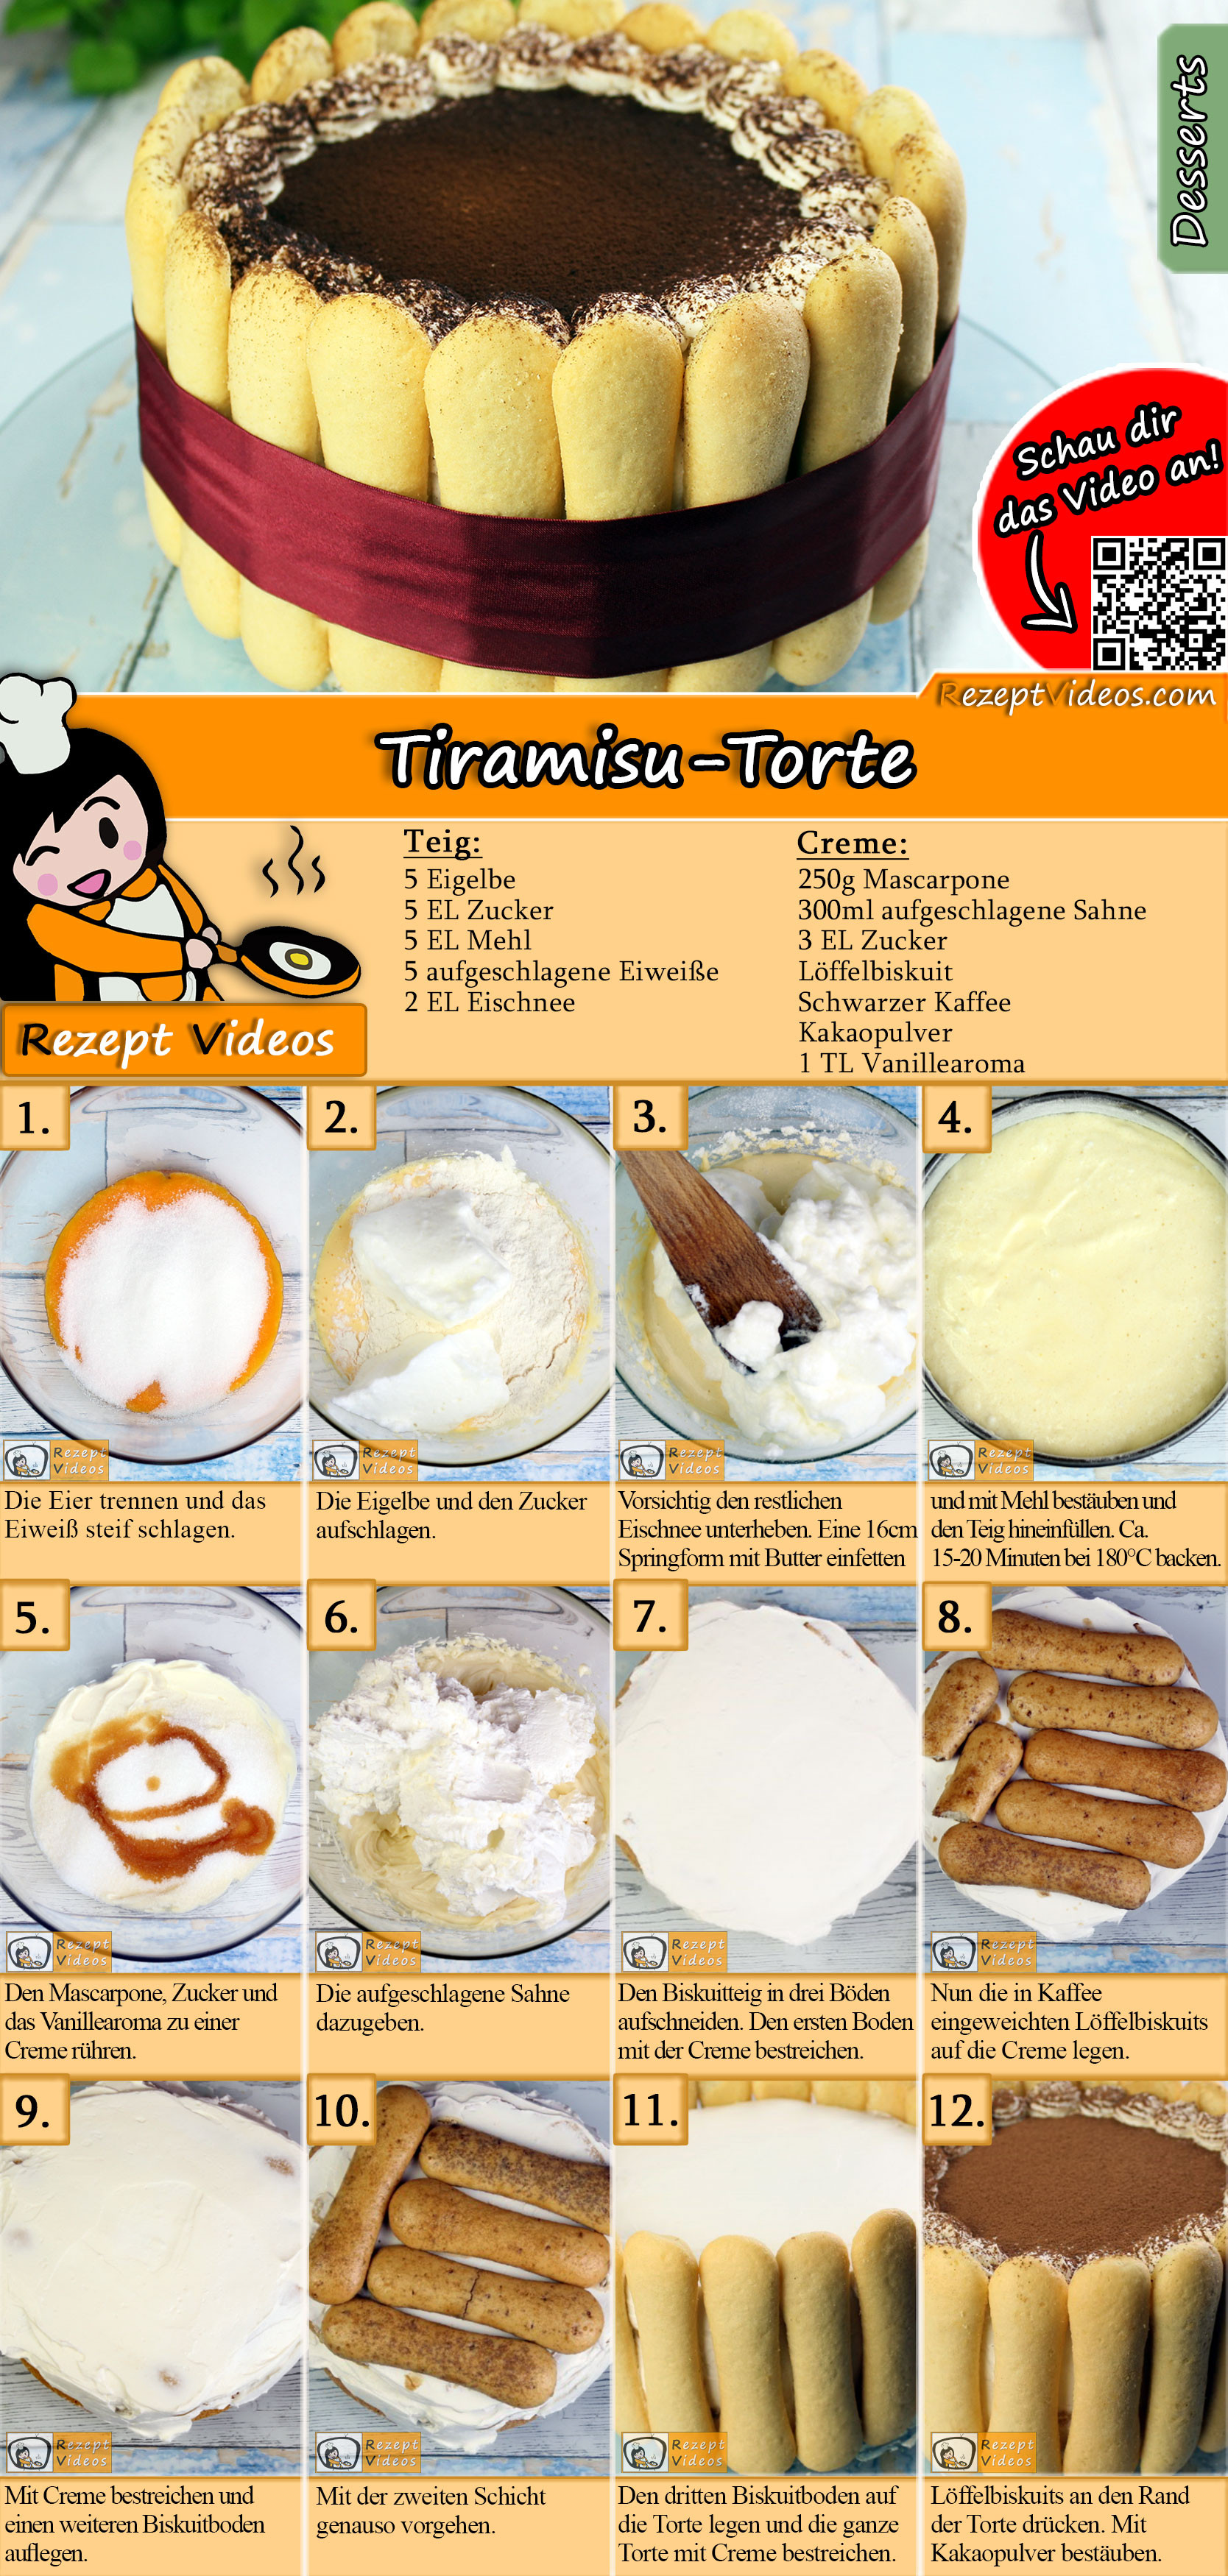 Tiramisu-Torte Rezept mit Video